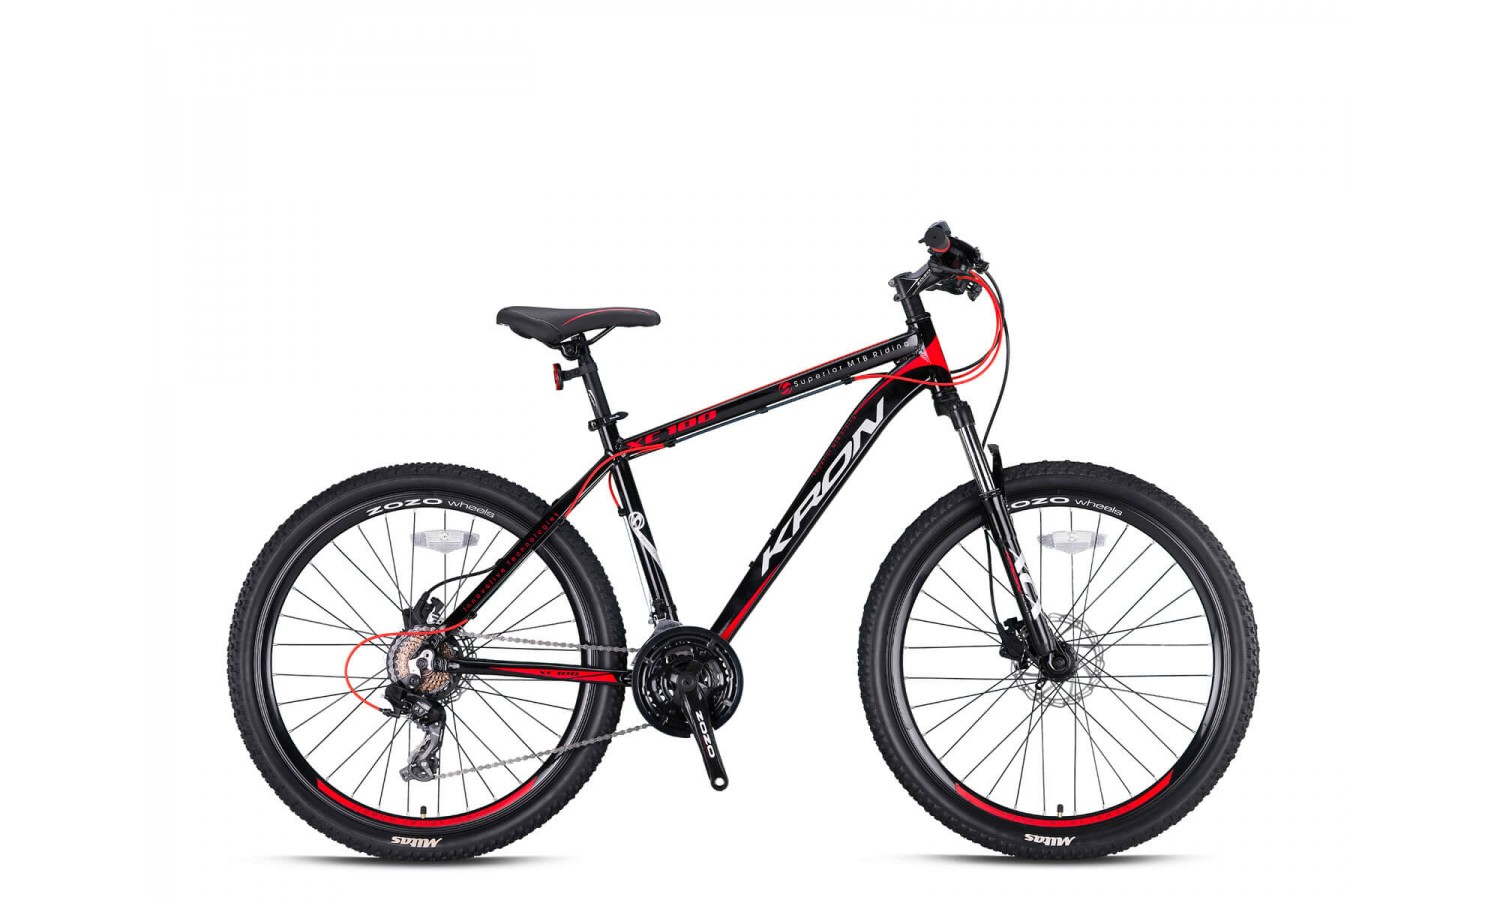 Kron Xc100 29 Md Dağ Bisikleti (Titanyum Gri Kırmızı)